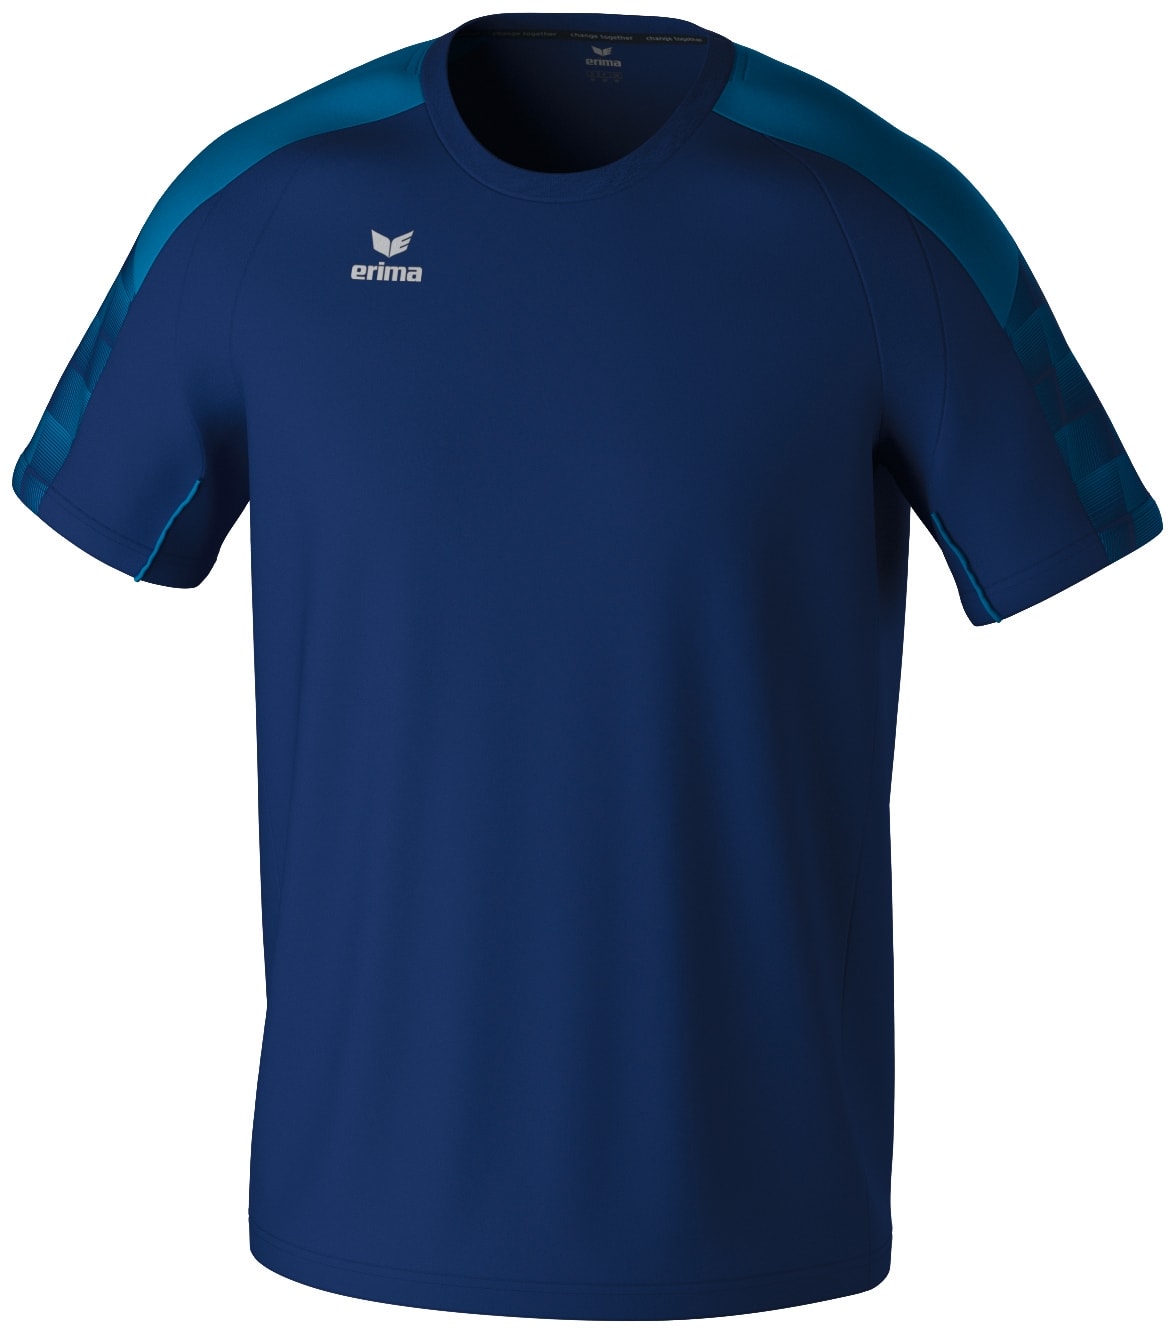 Erima EVO STAR T-Shirt new navy mykonos blue